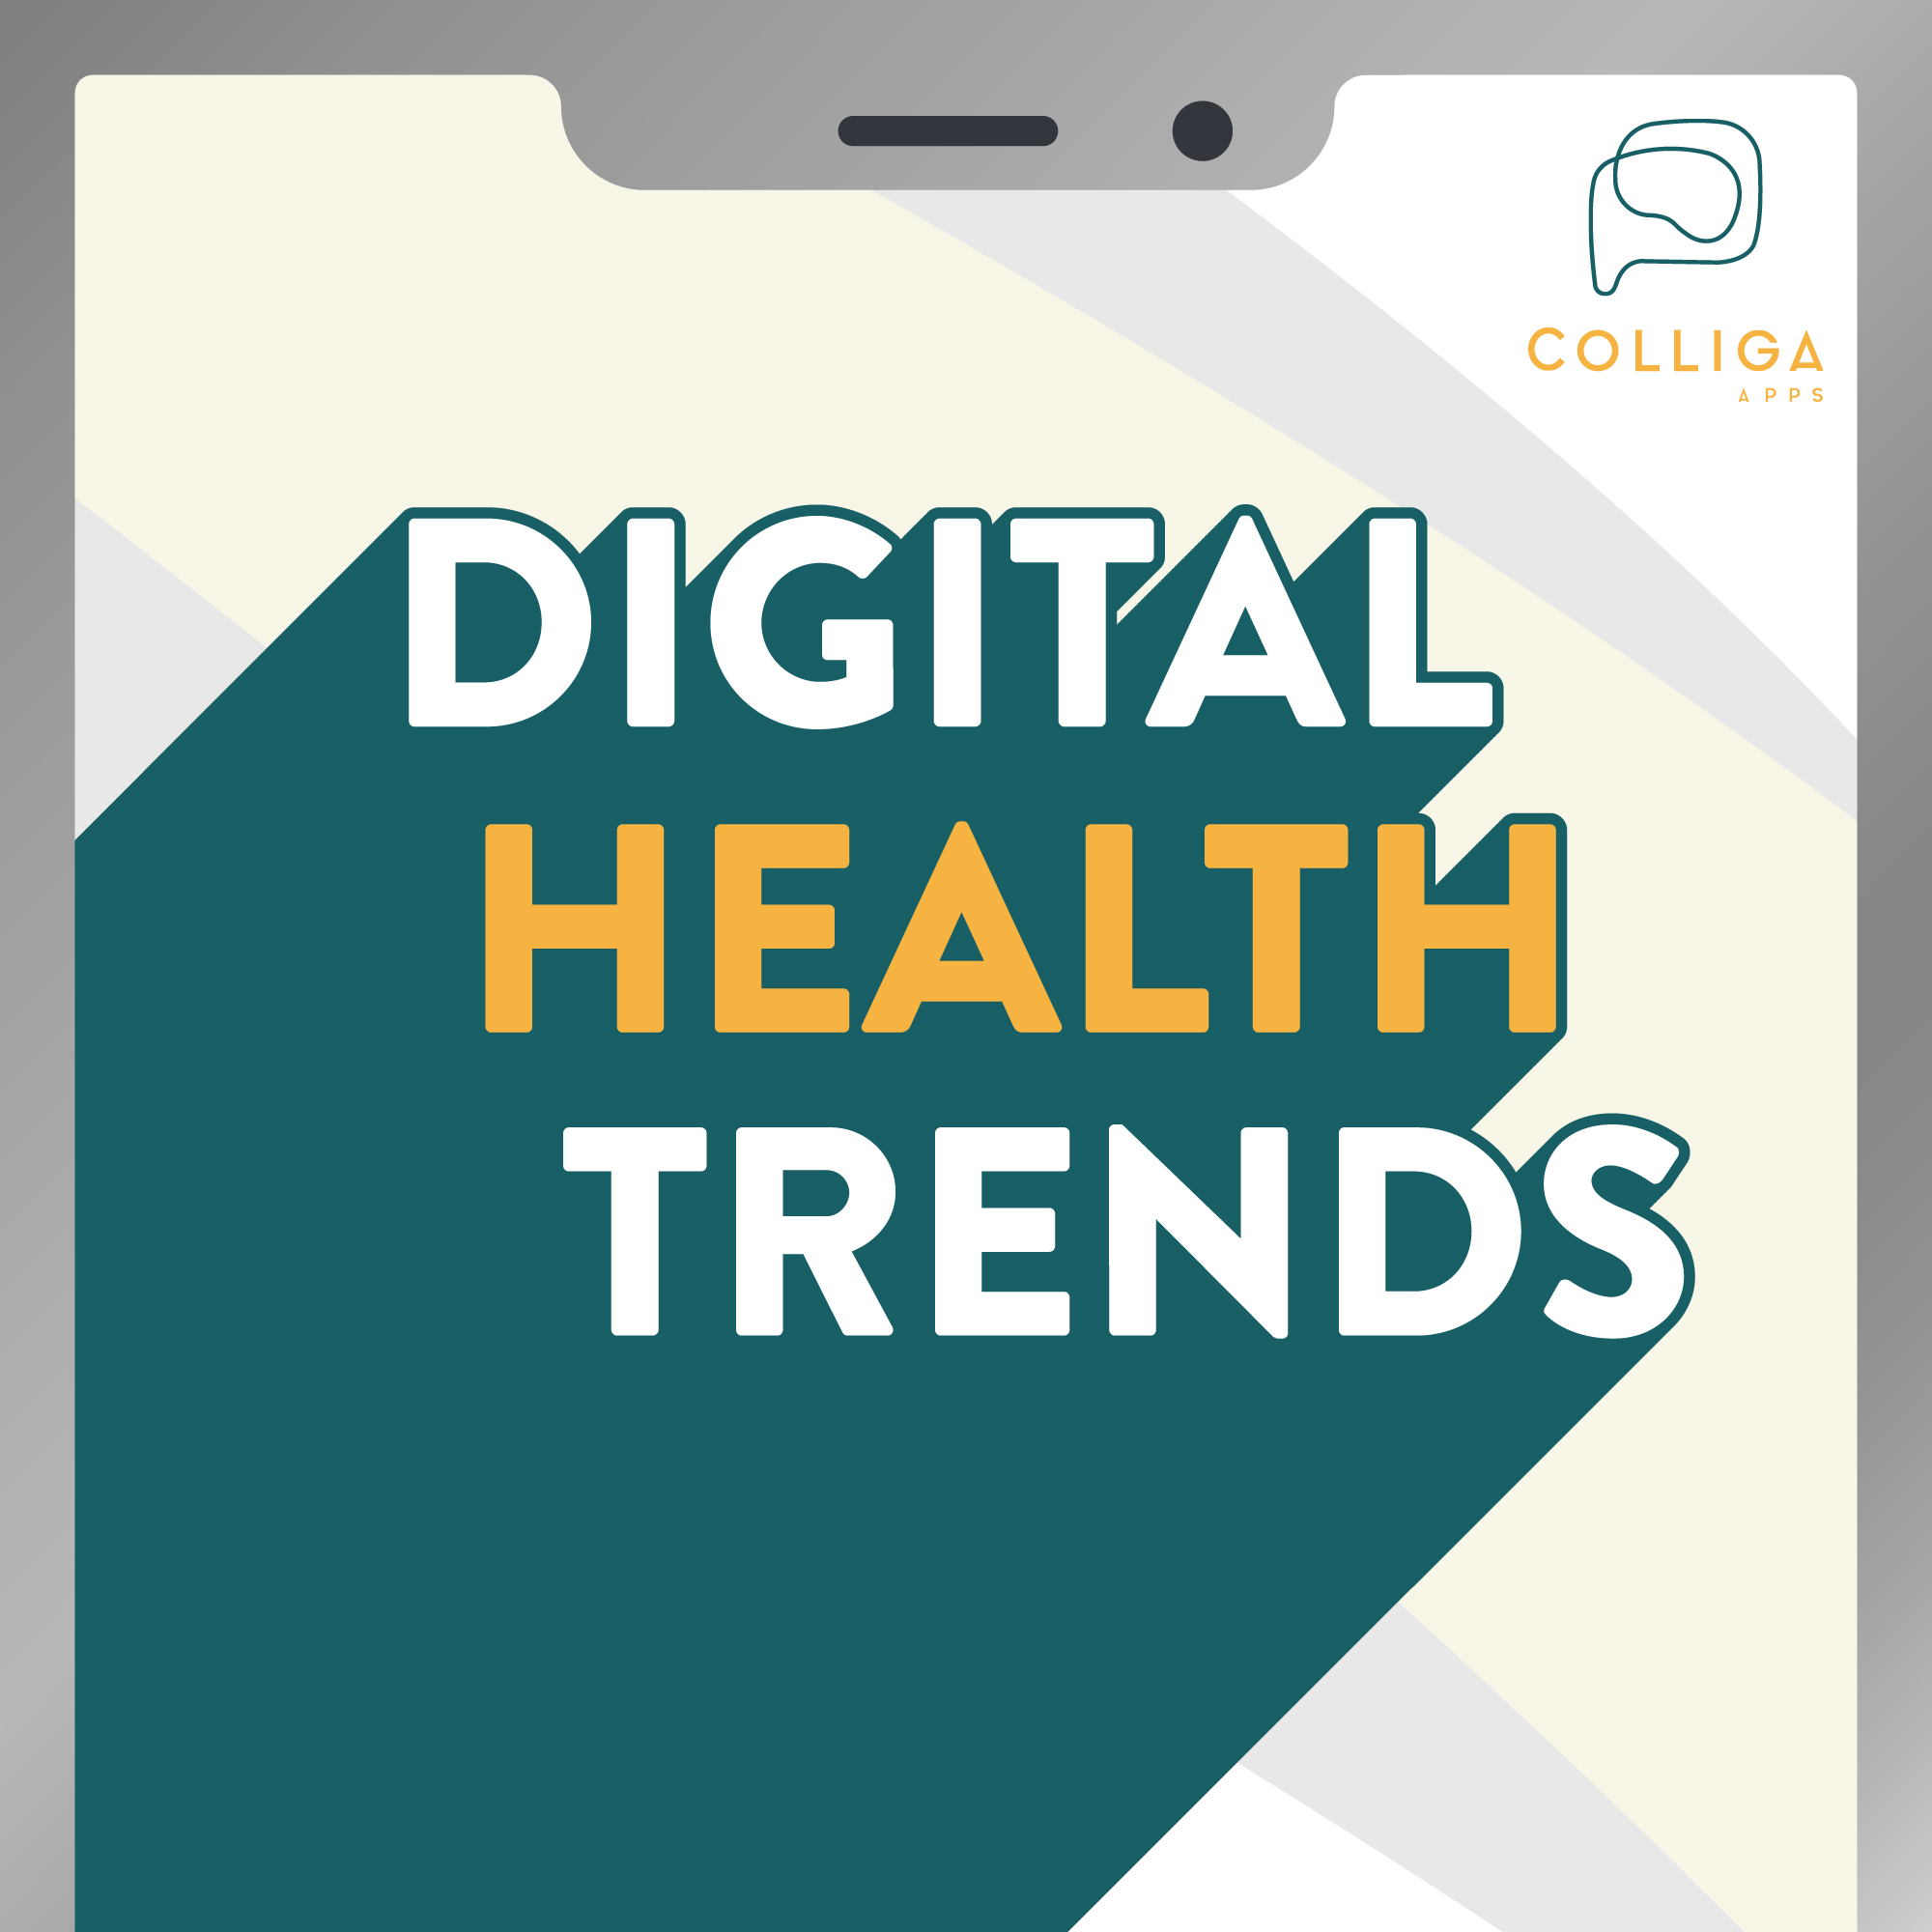 digital health trends cover art